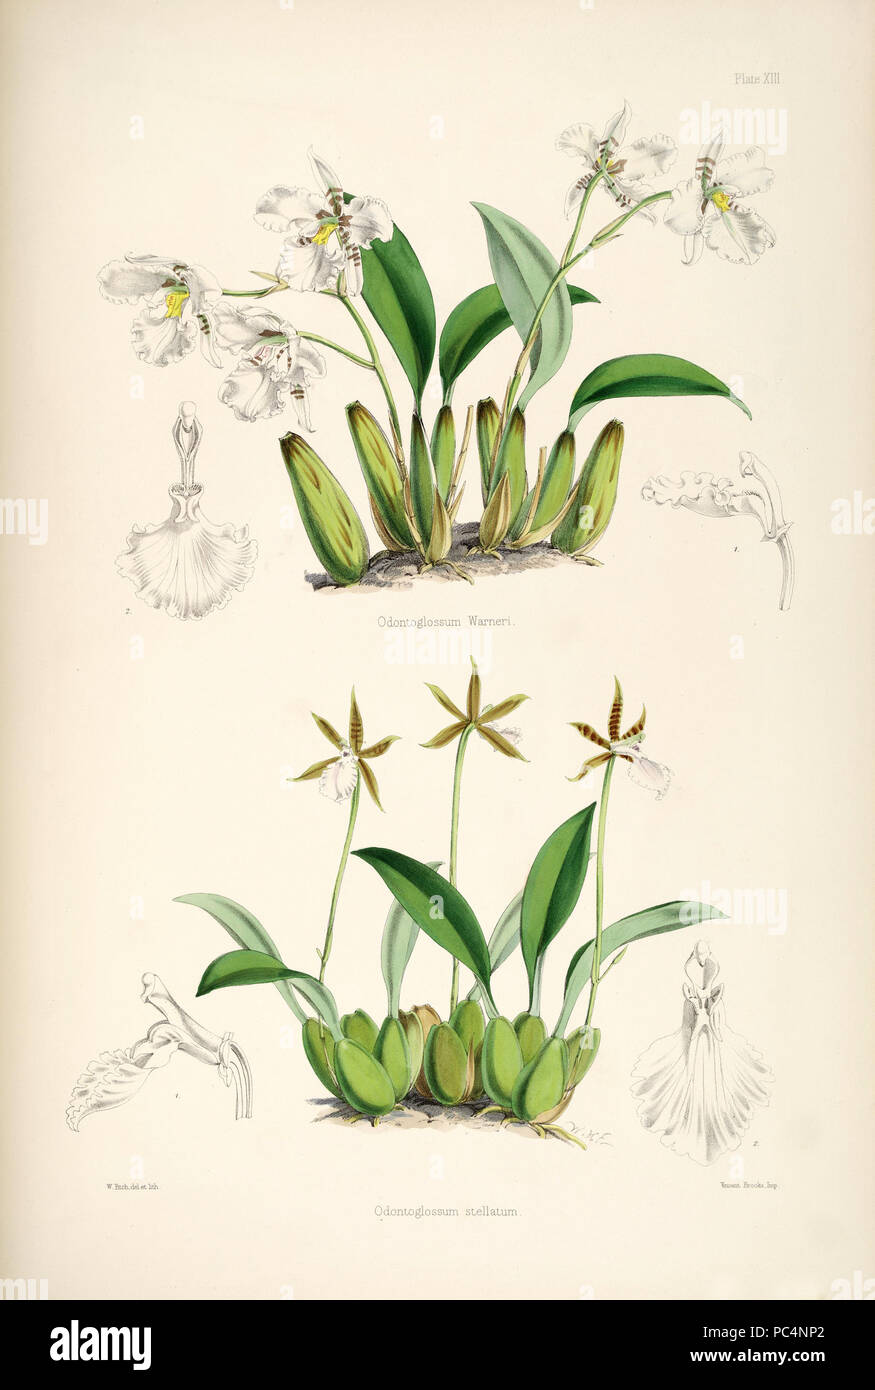 520 Rhynchostele rossii (as Odontoglossum warnerianum) and Rhynchostele stellata (as Odontoglossum stellatum) - pl. 13 - Bateman, Monogr.Odont Stock Photo